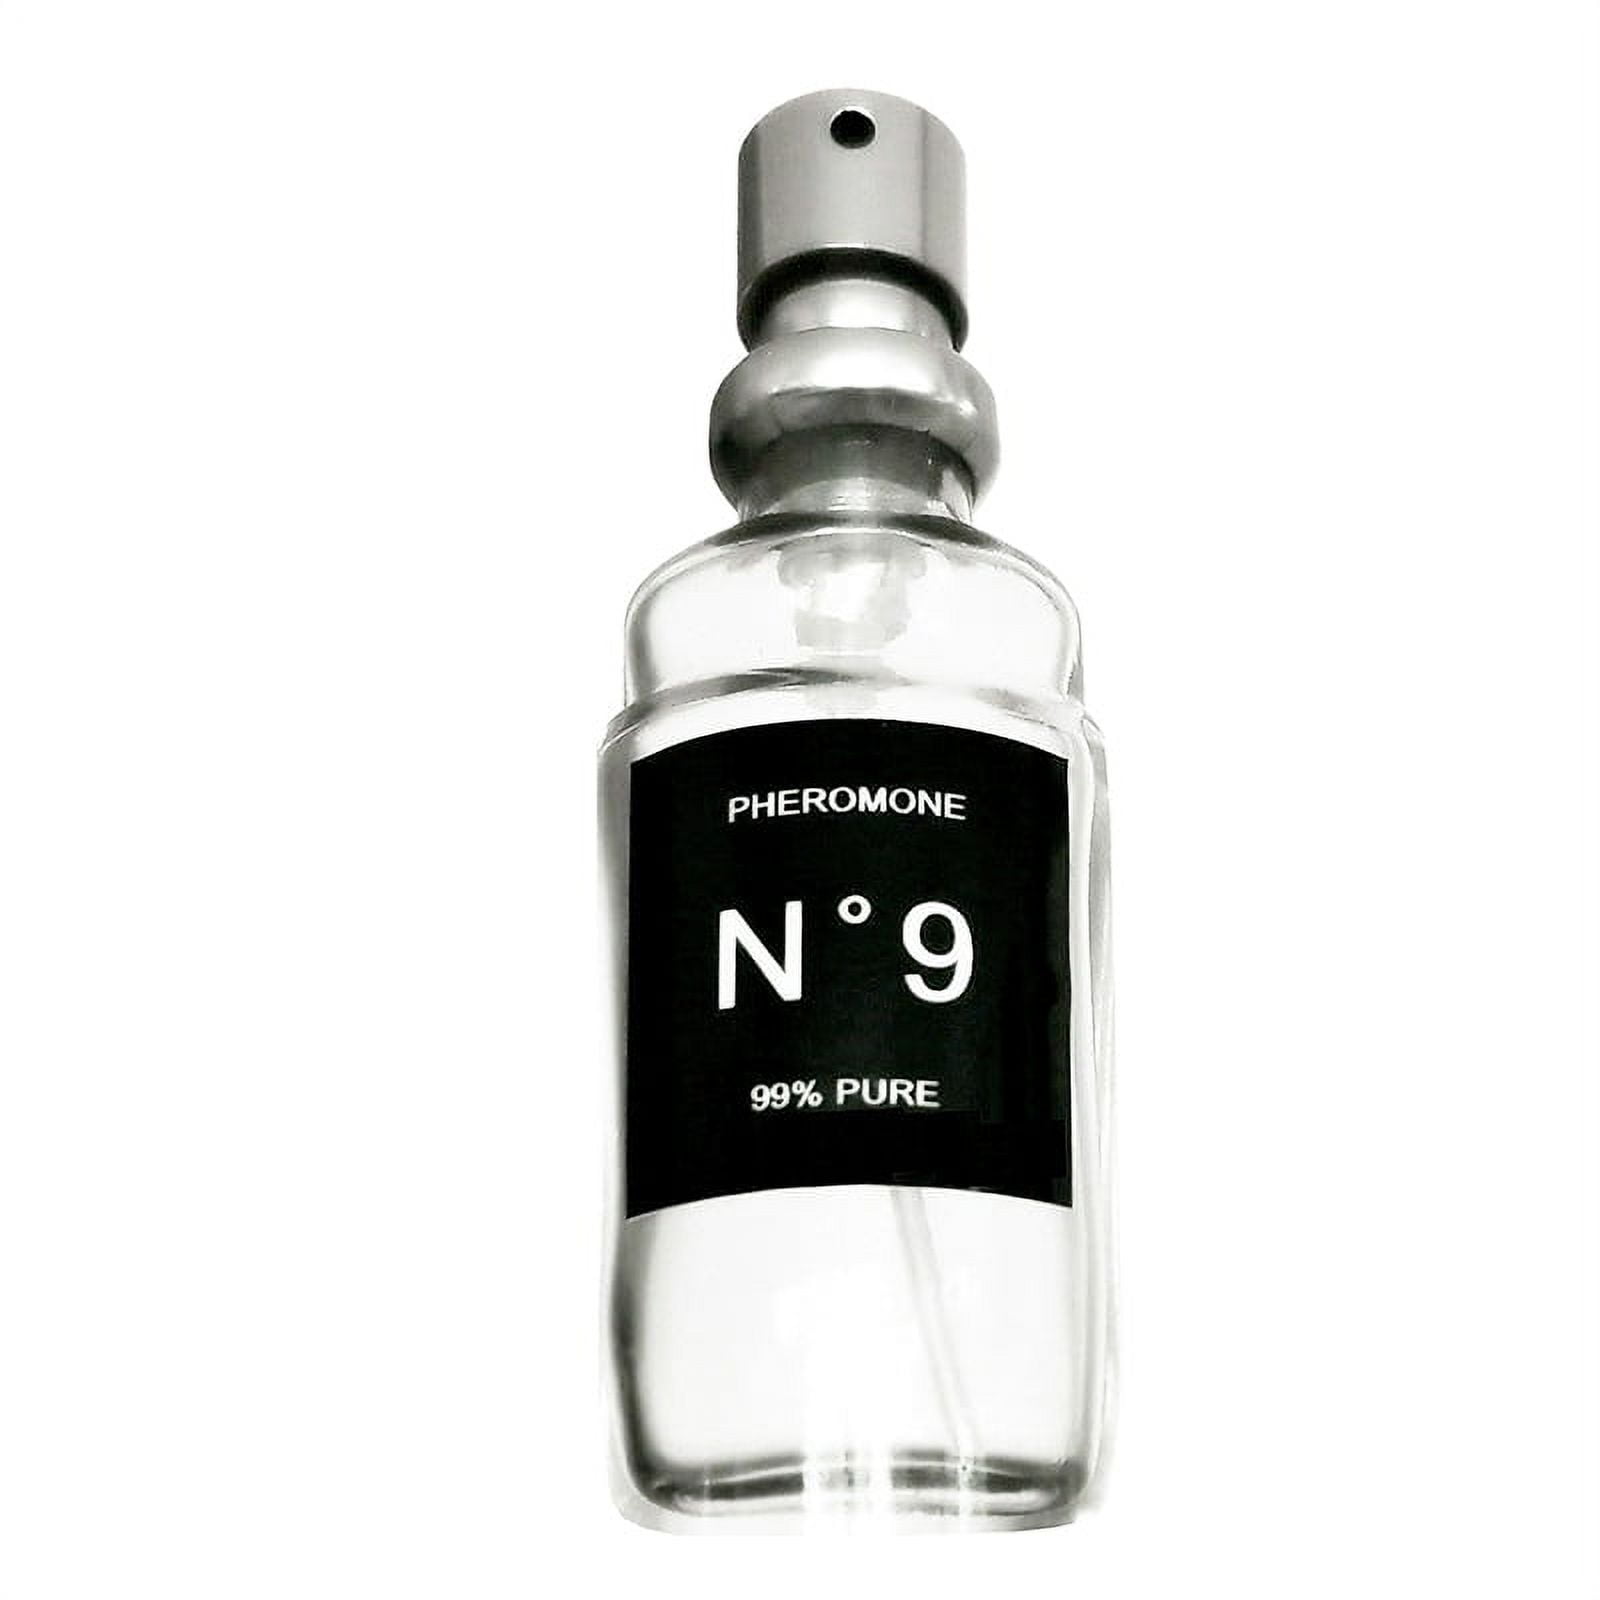 N o 9 Bask - Pheromone N o 9 for Men Portable Glass Spray (0.3 oz.) - Black  Label 